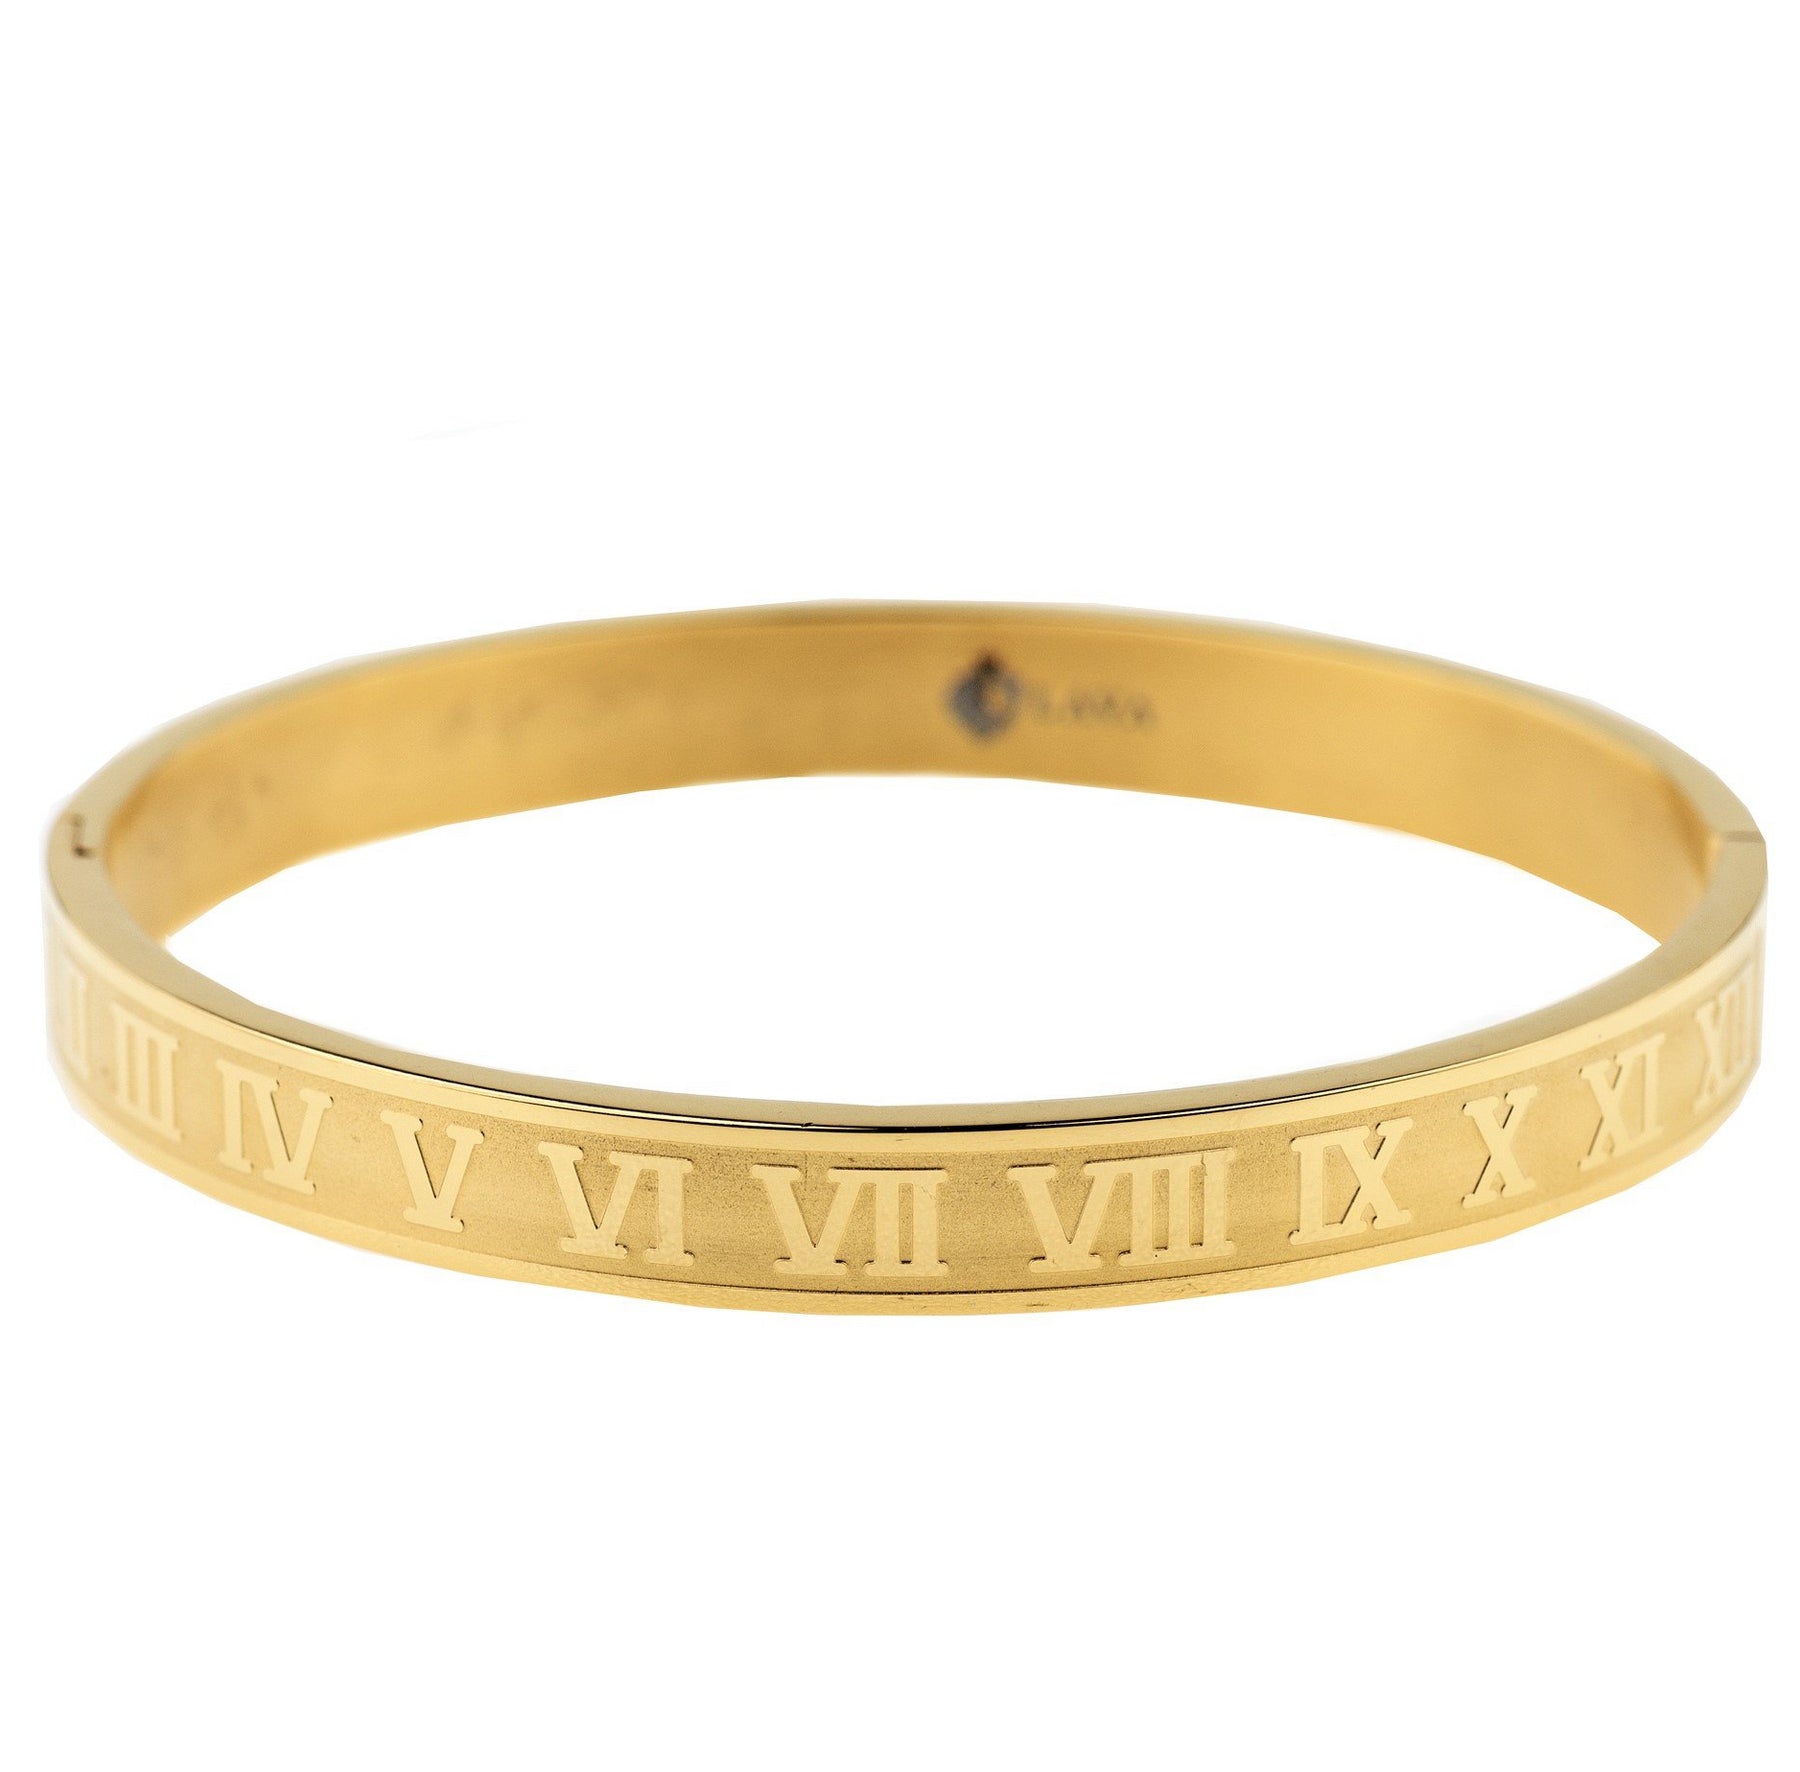 Luxury Men Women Gold Stainless Steel Roman Numeral Bangle Couple Bracelet  Gift